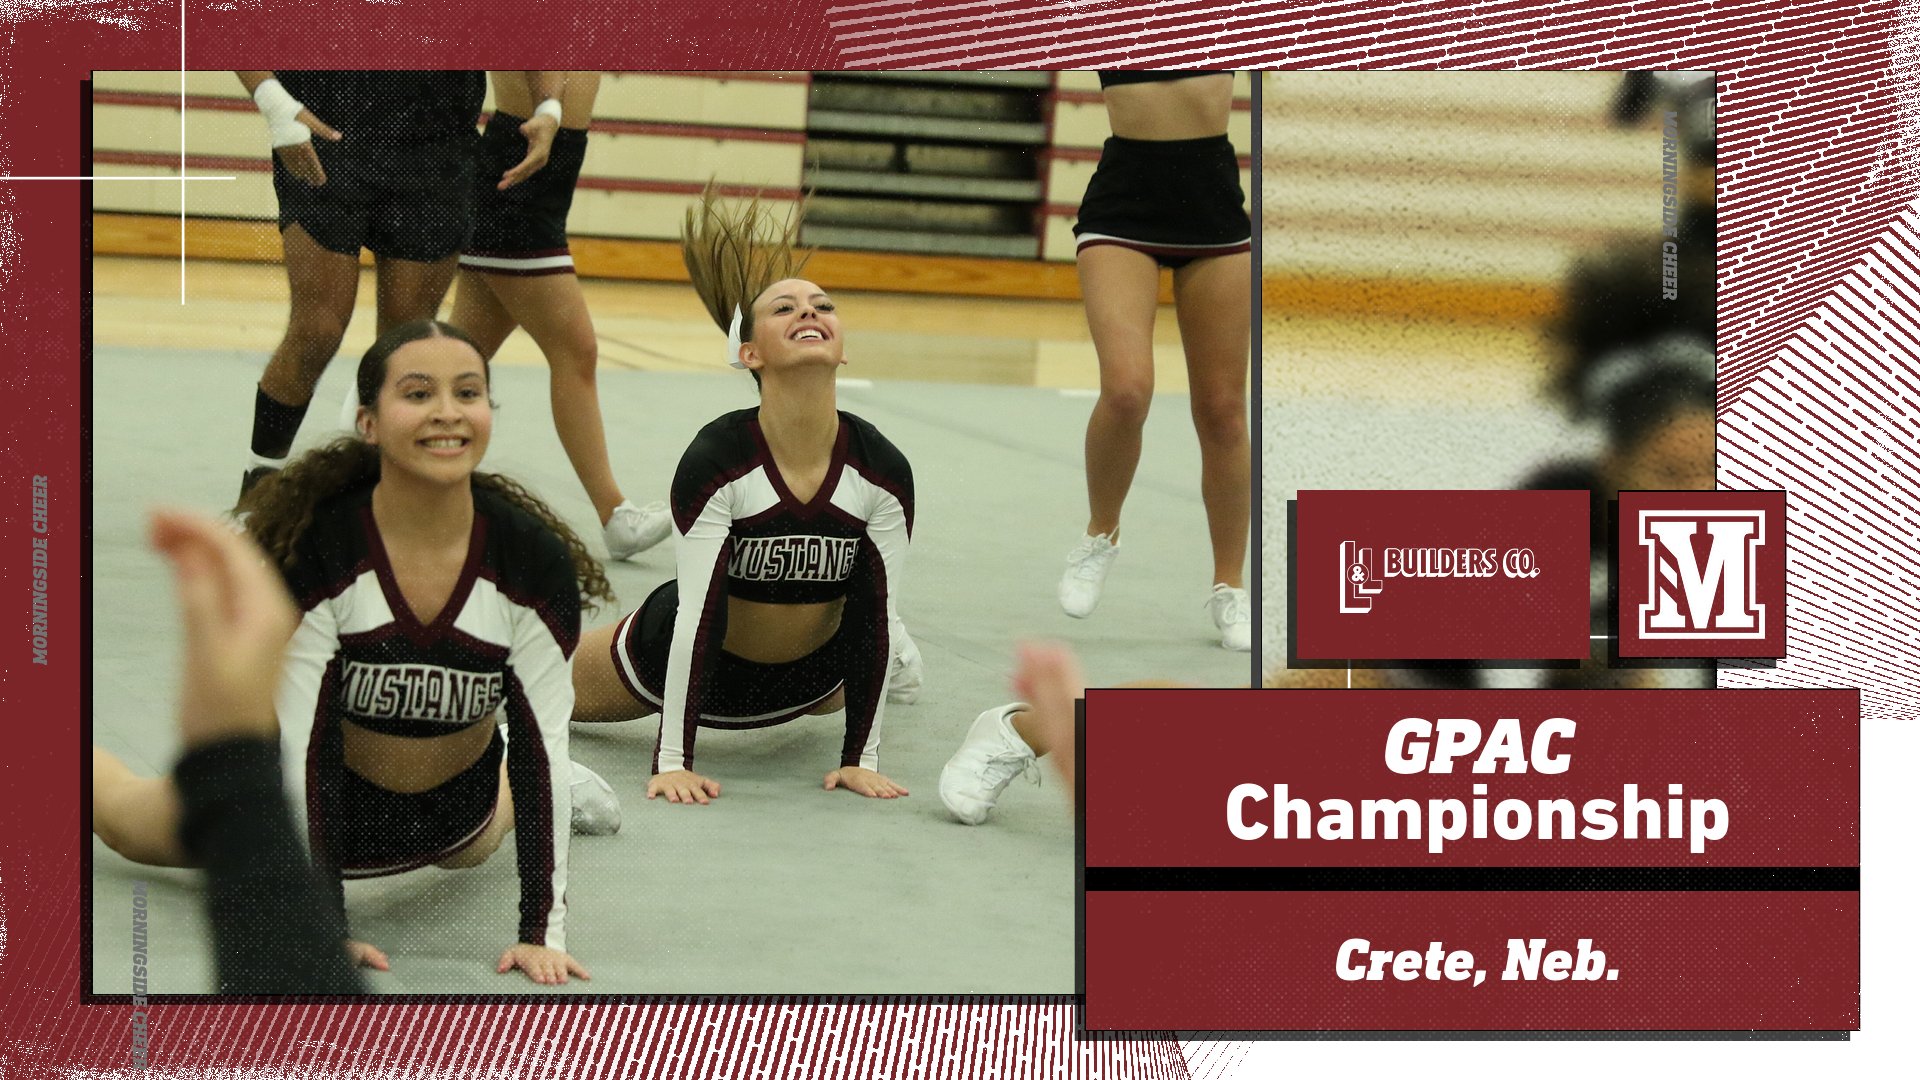 Cheer posts strong performances at GPAC Championship